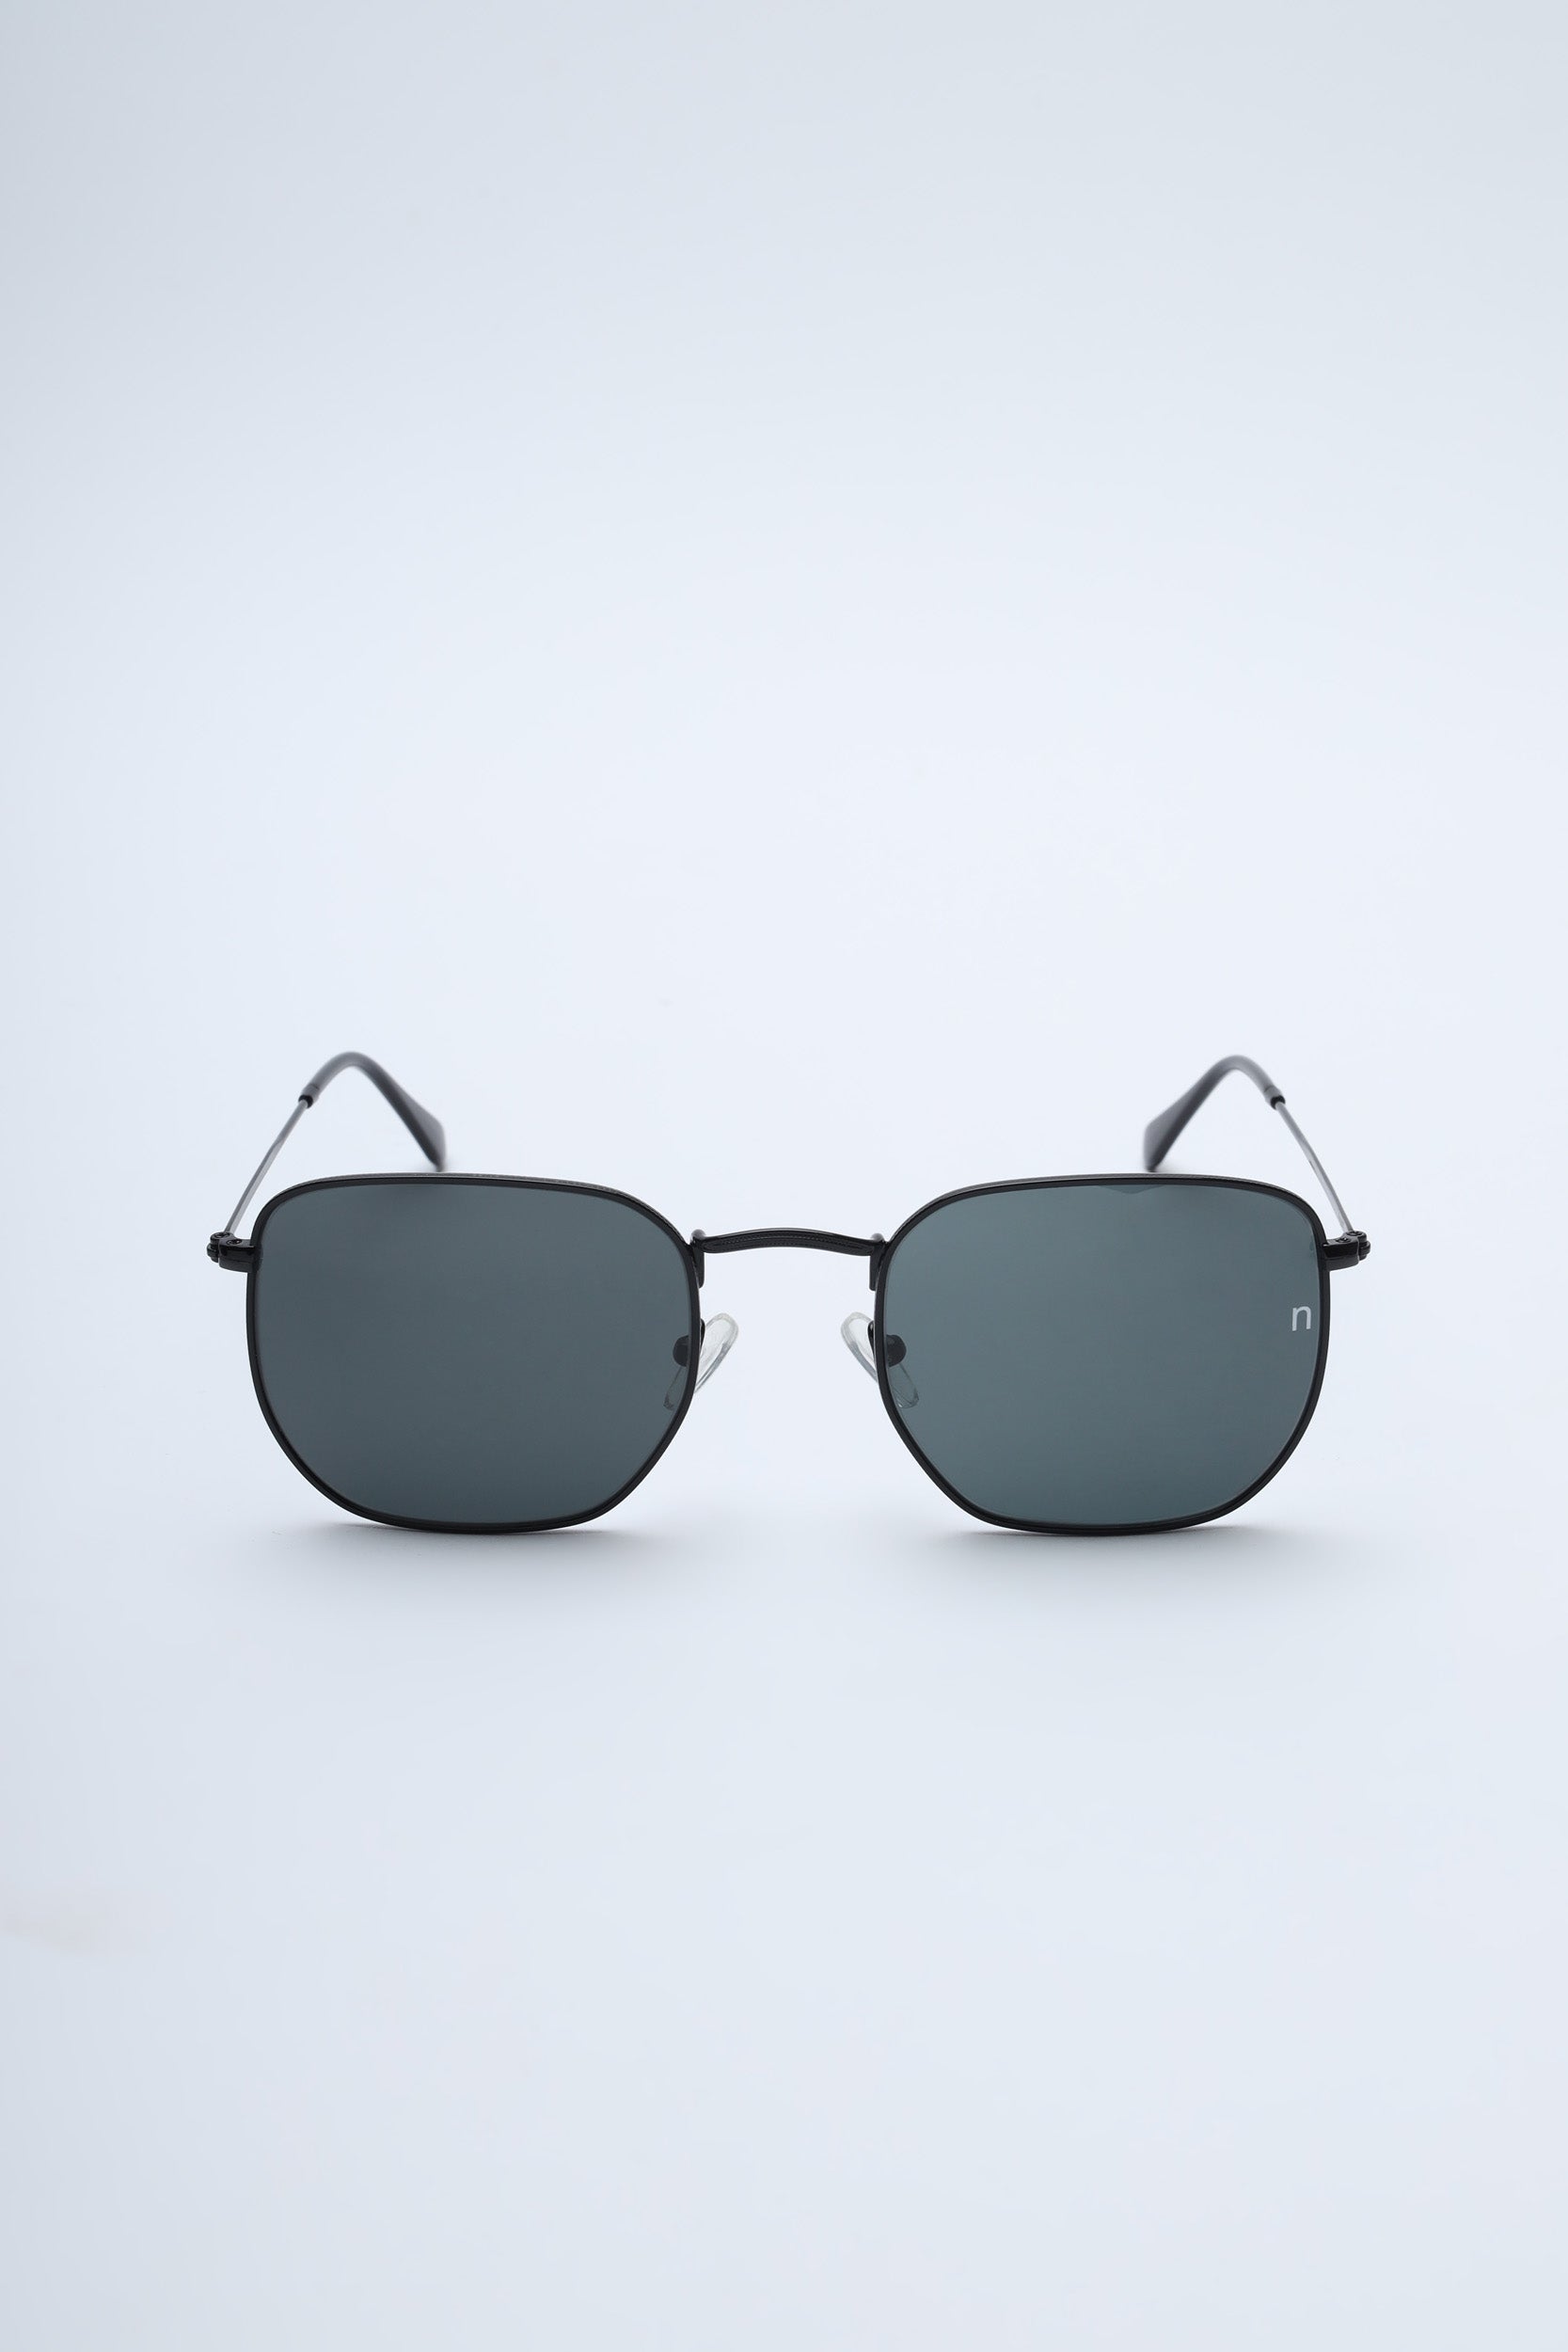 NS2005BFBL Stainless Steel Black Frame with Black Glass Lens Sunglasse –  Noggah Sunglasses